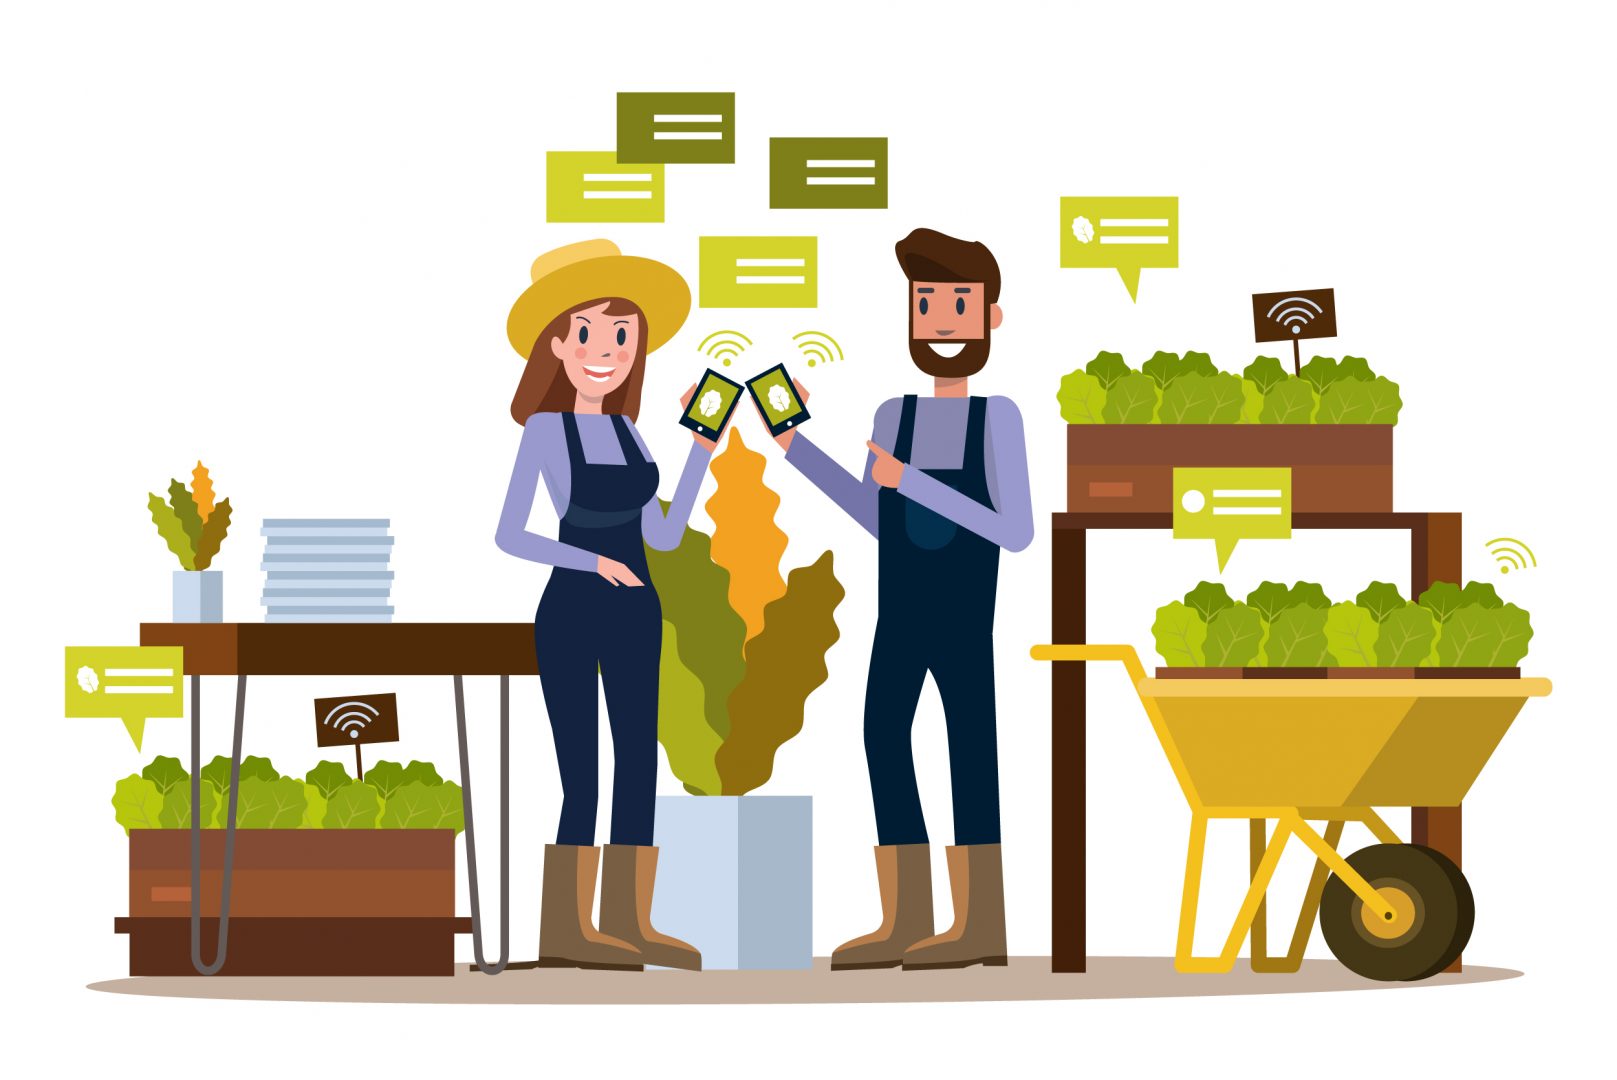 modern farmers applying smart farming using TeamViewer IoT software on smart phones in green house